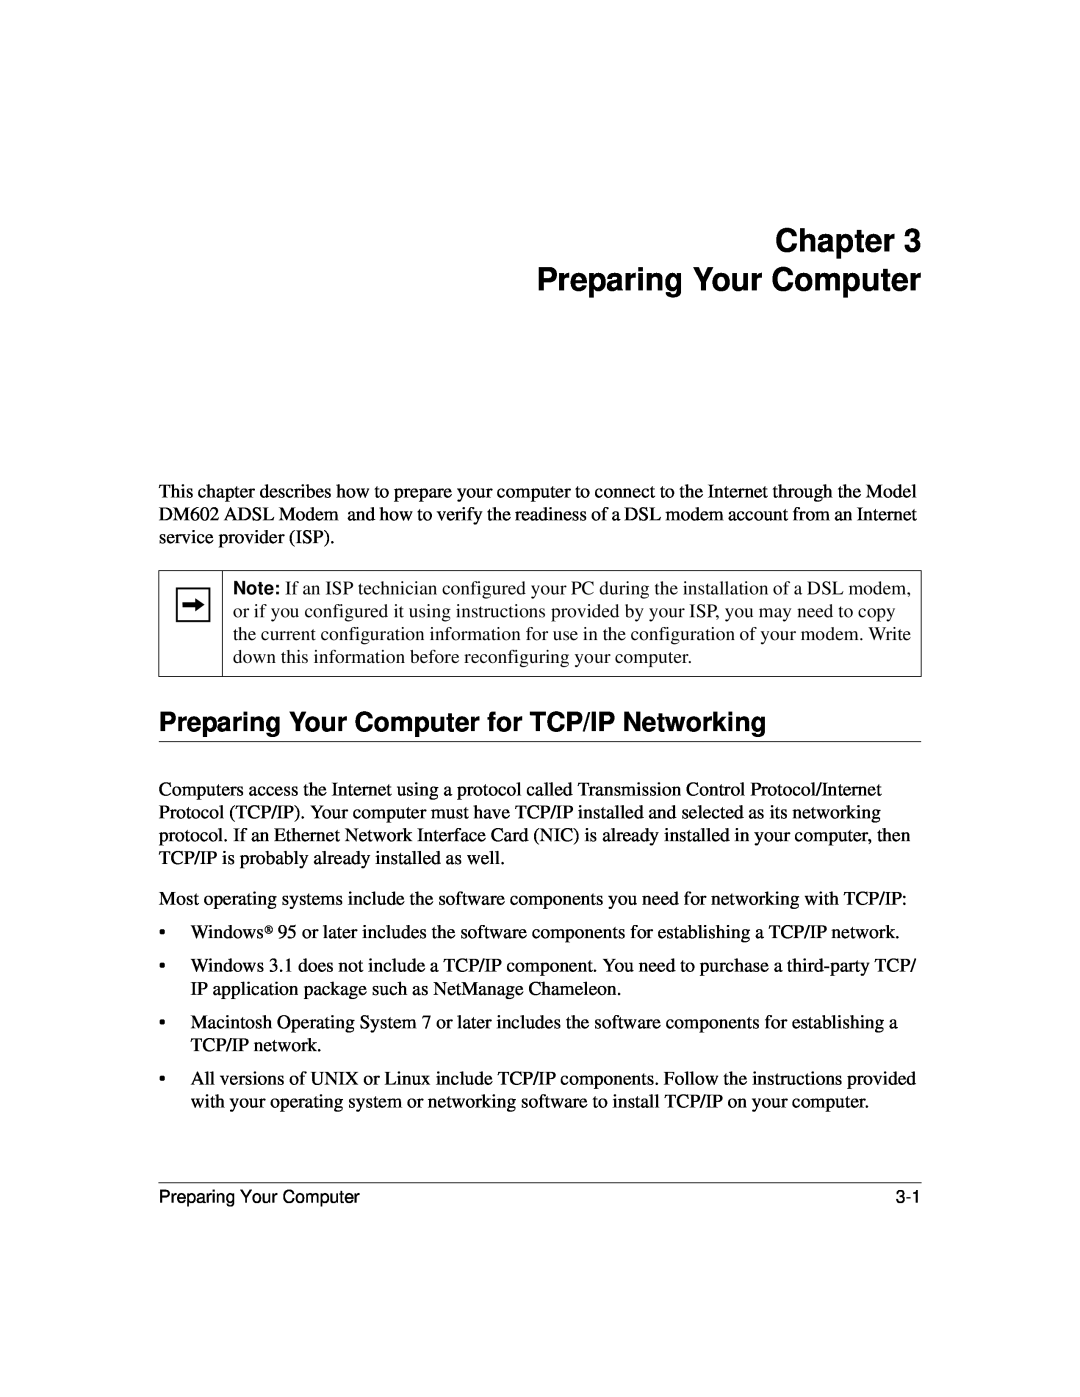 NETGEAR DM602 manual Chapter Preparing Your Computer, Preparing Your Computer for TCP/IP Networking 